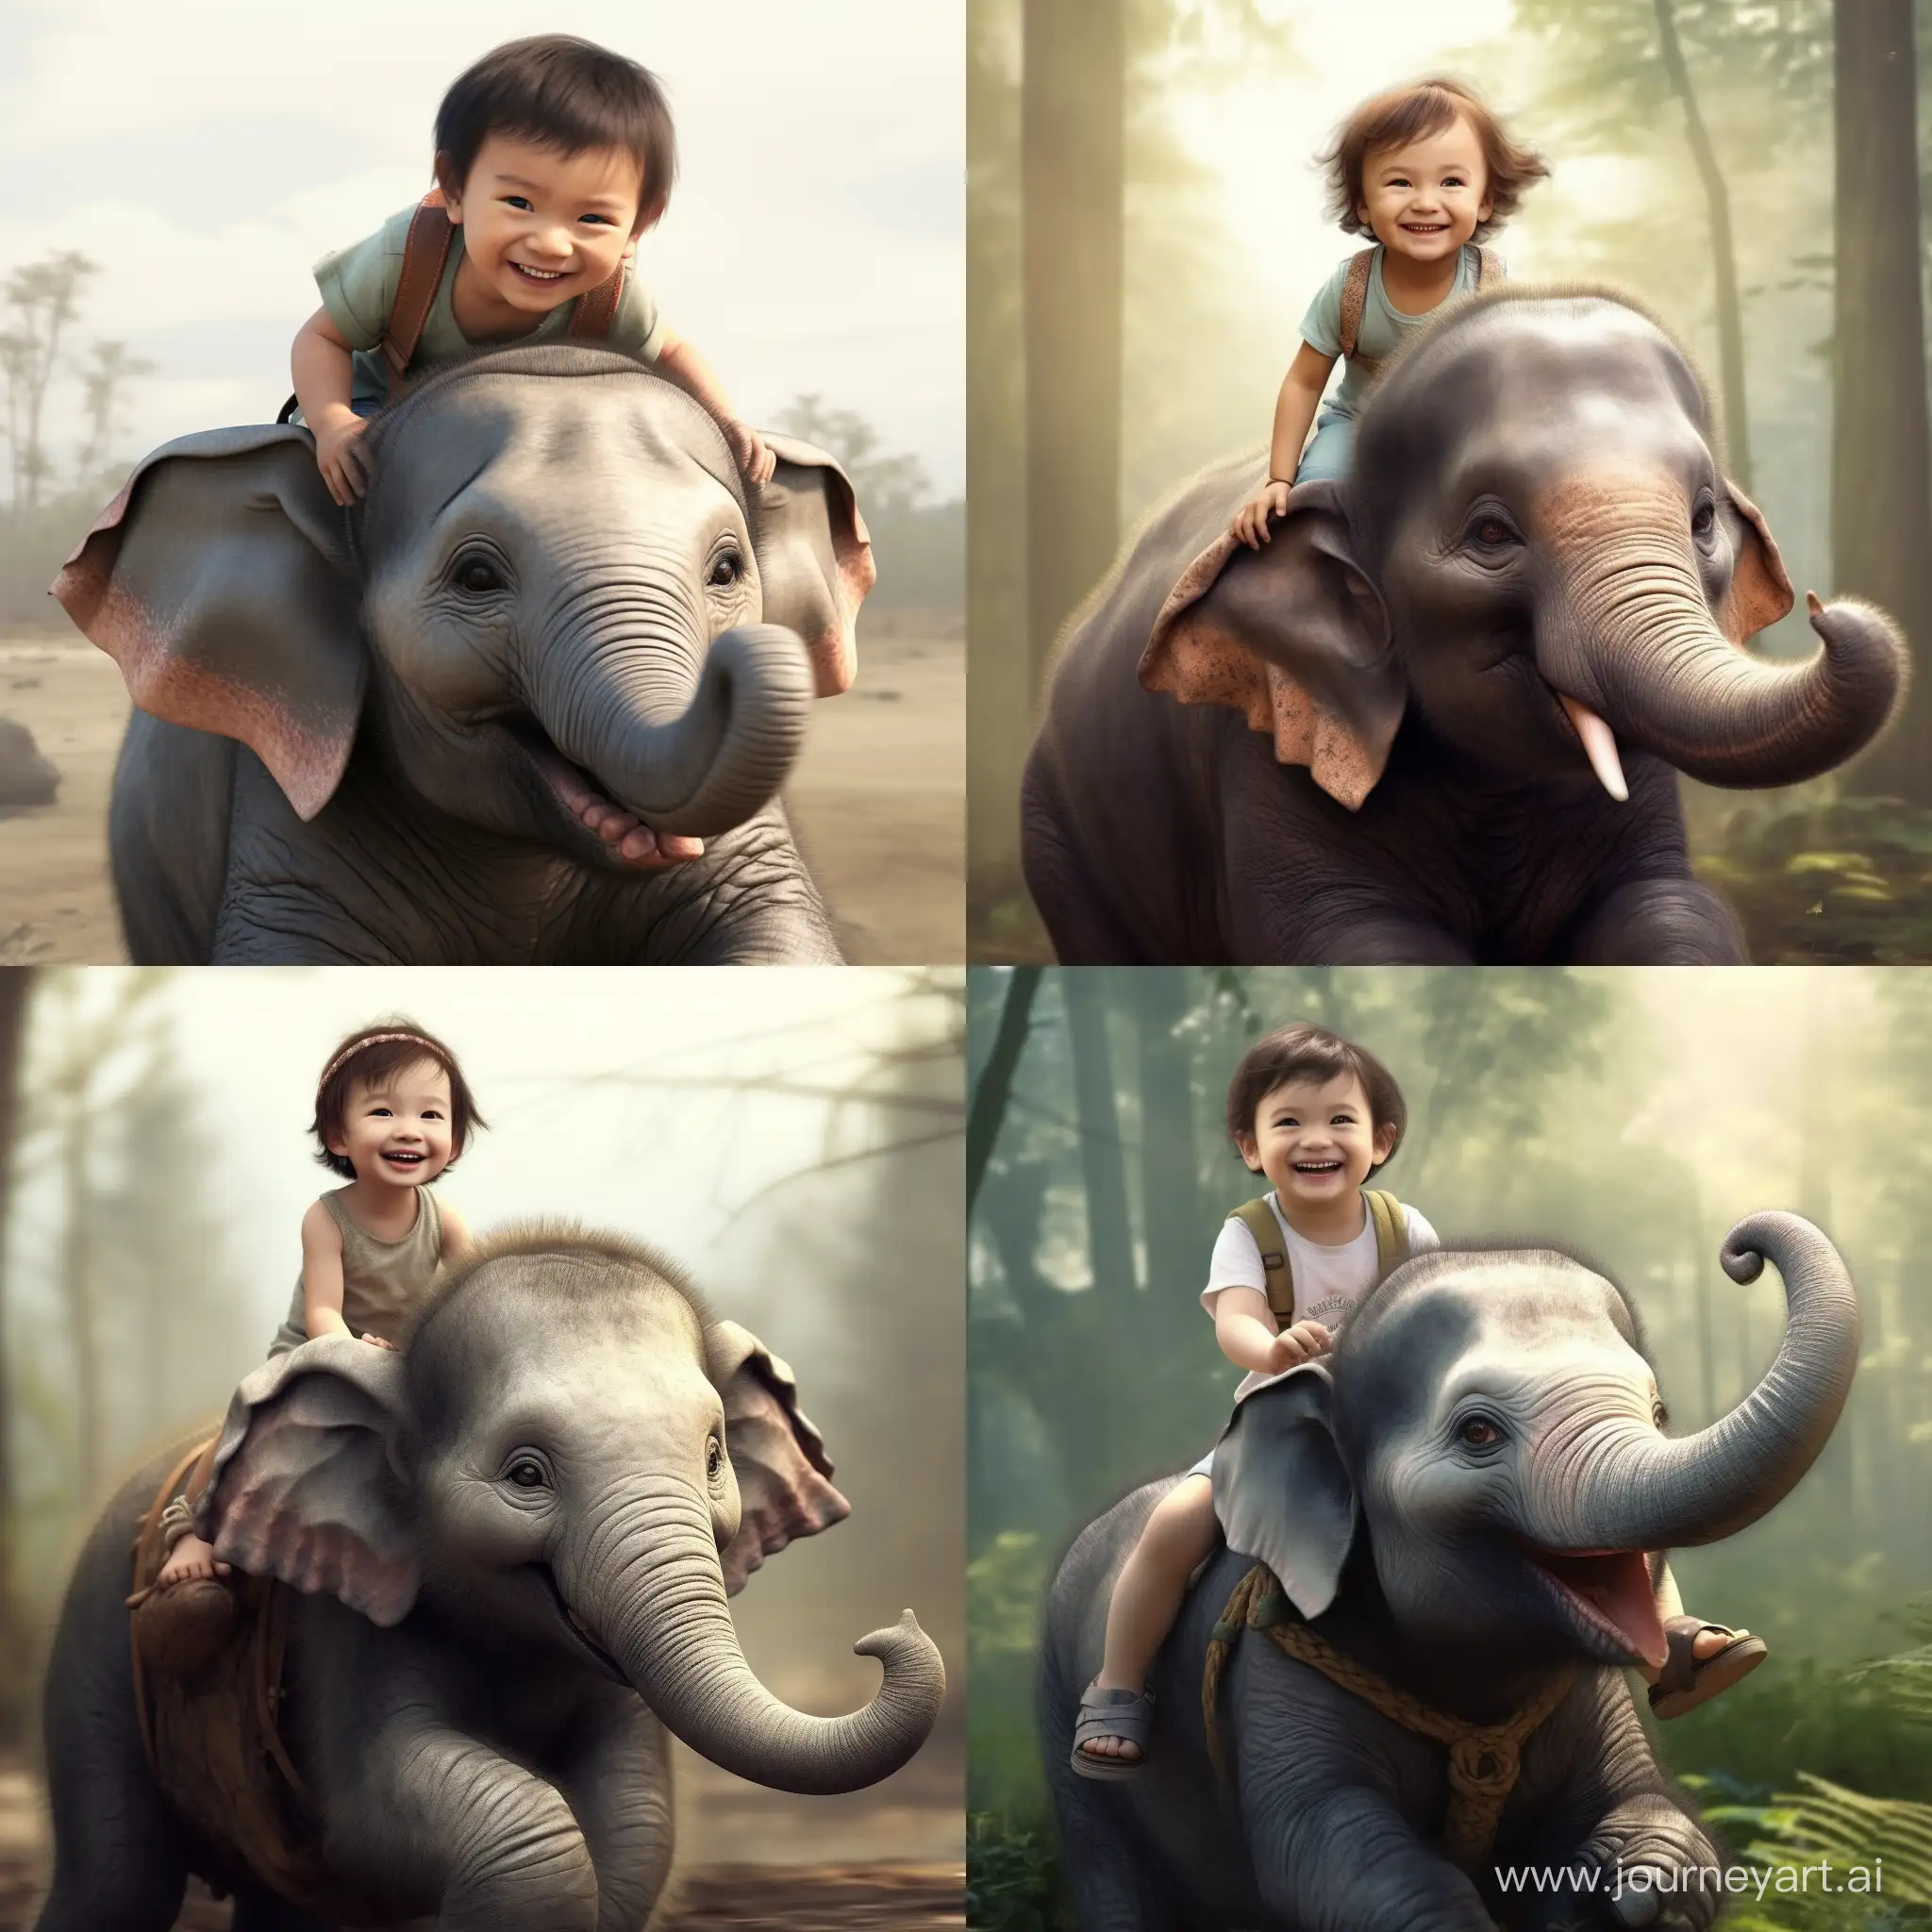 A cute baby monkey riding on a elephant, ultra realistic